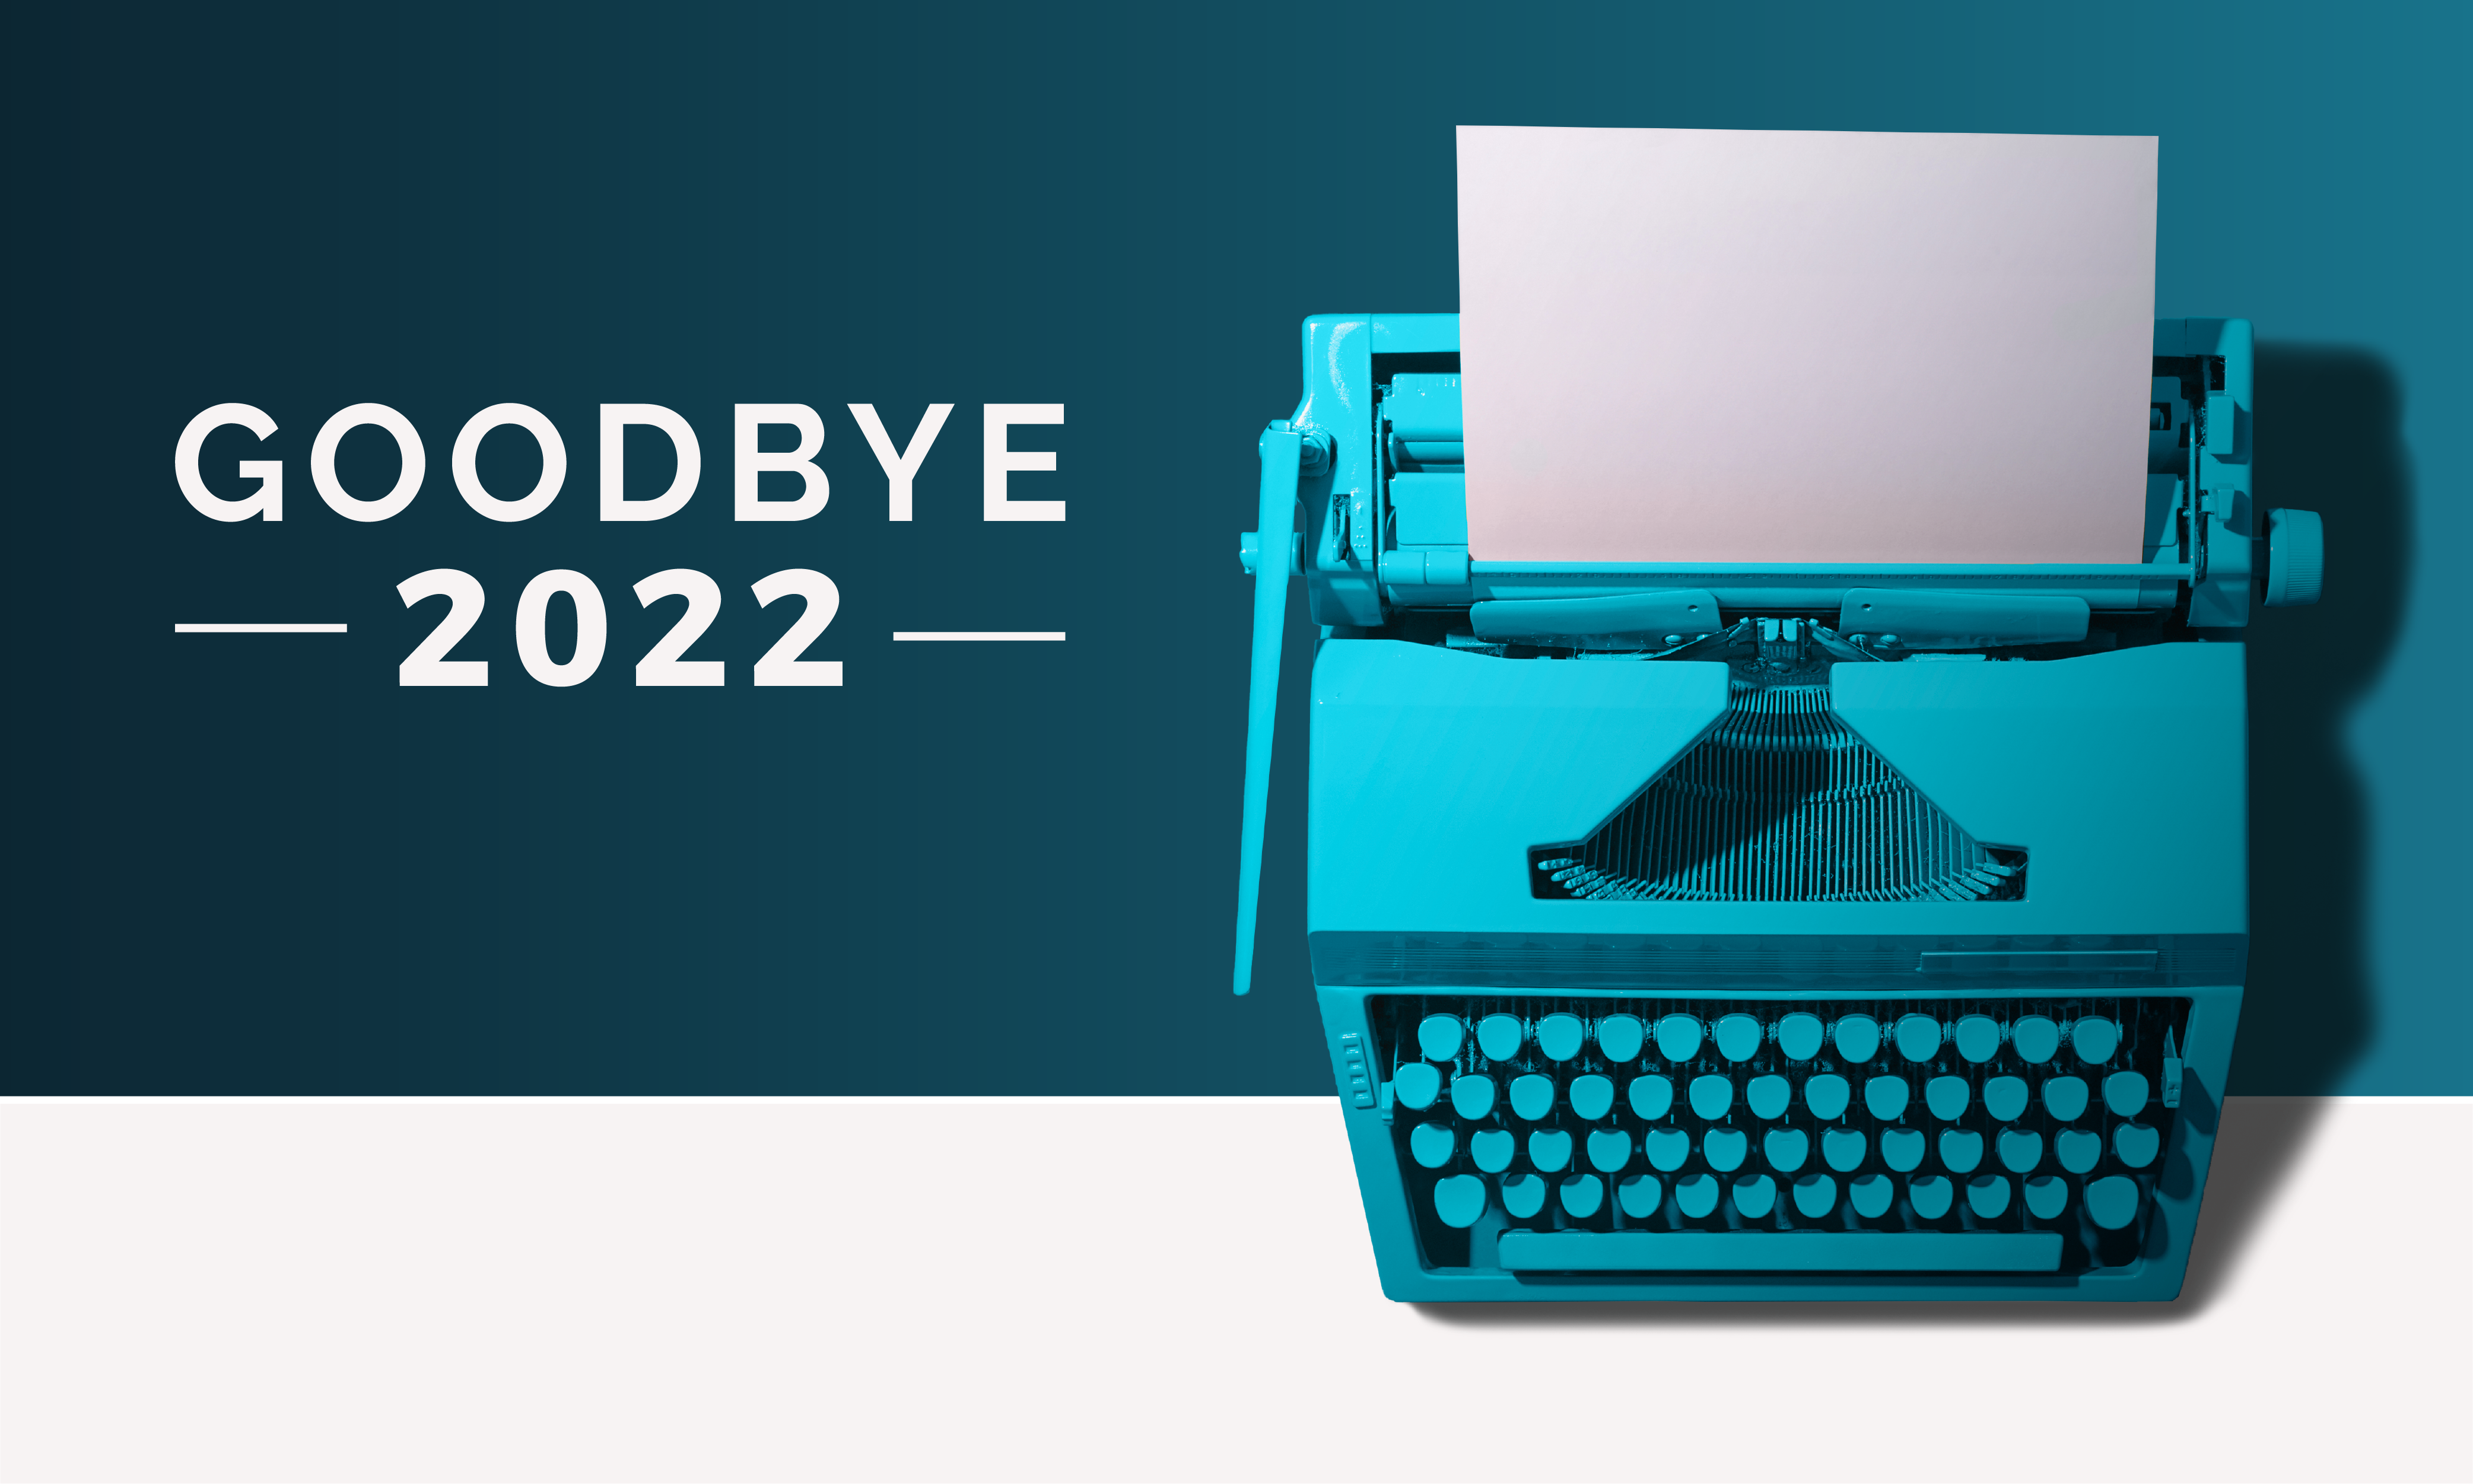 Goodbye to 2022